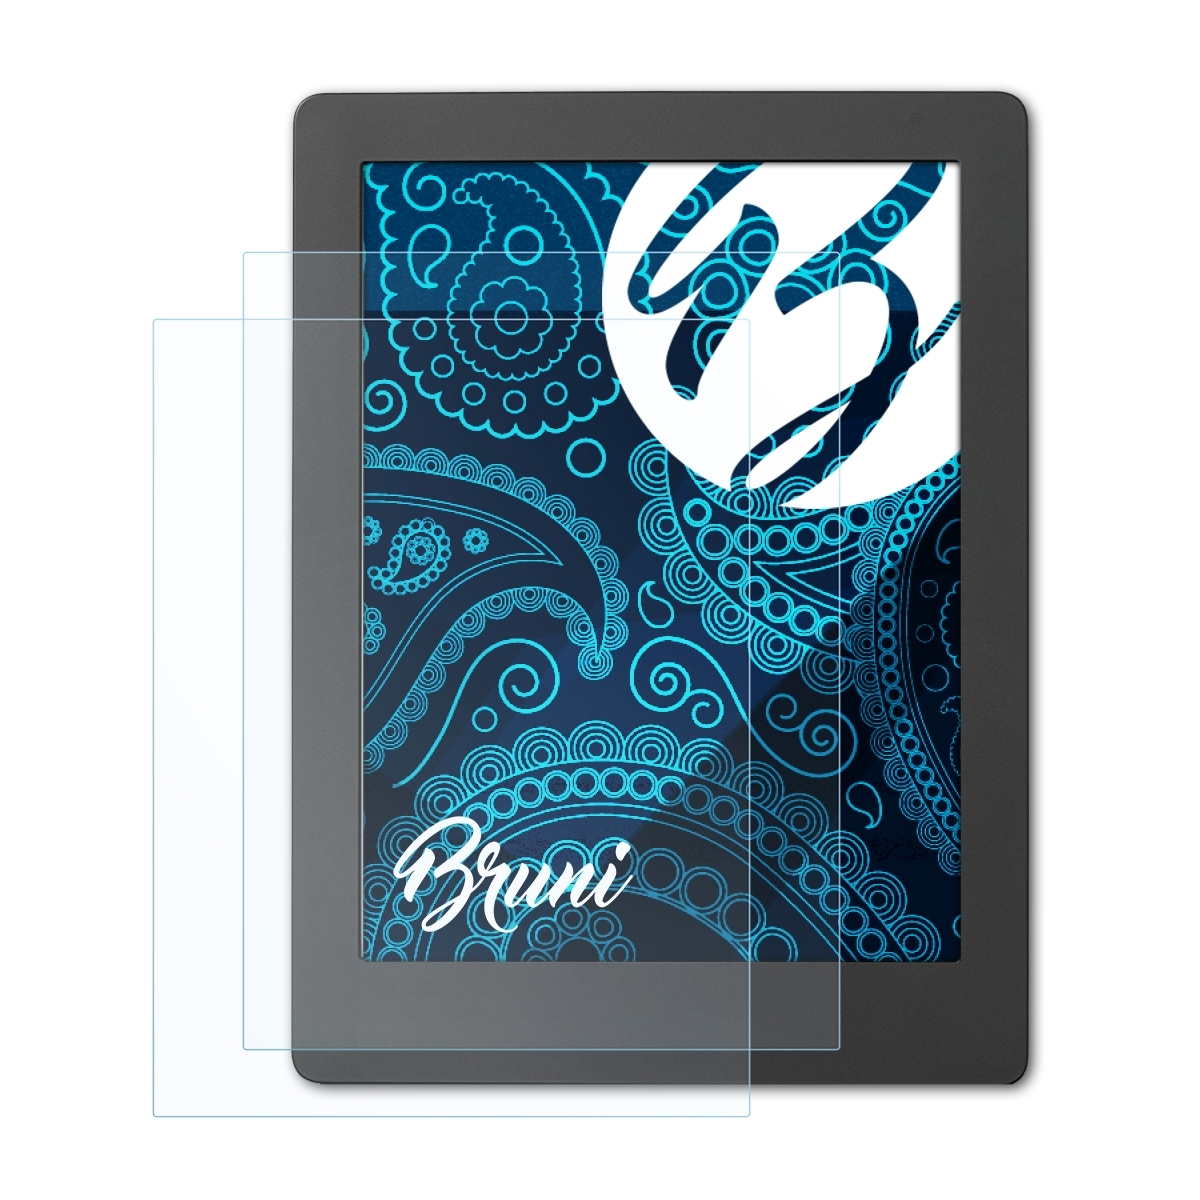 BRUNI 2x 2) Edition H2O Aura Kobo Basics-Clear Schutzfolie(für